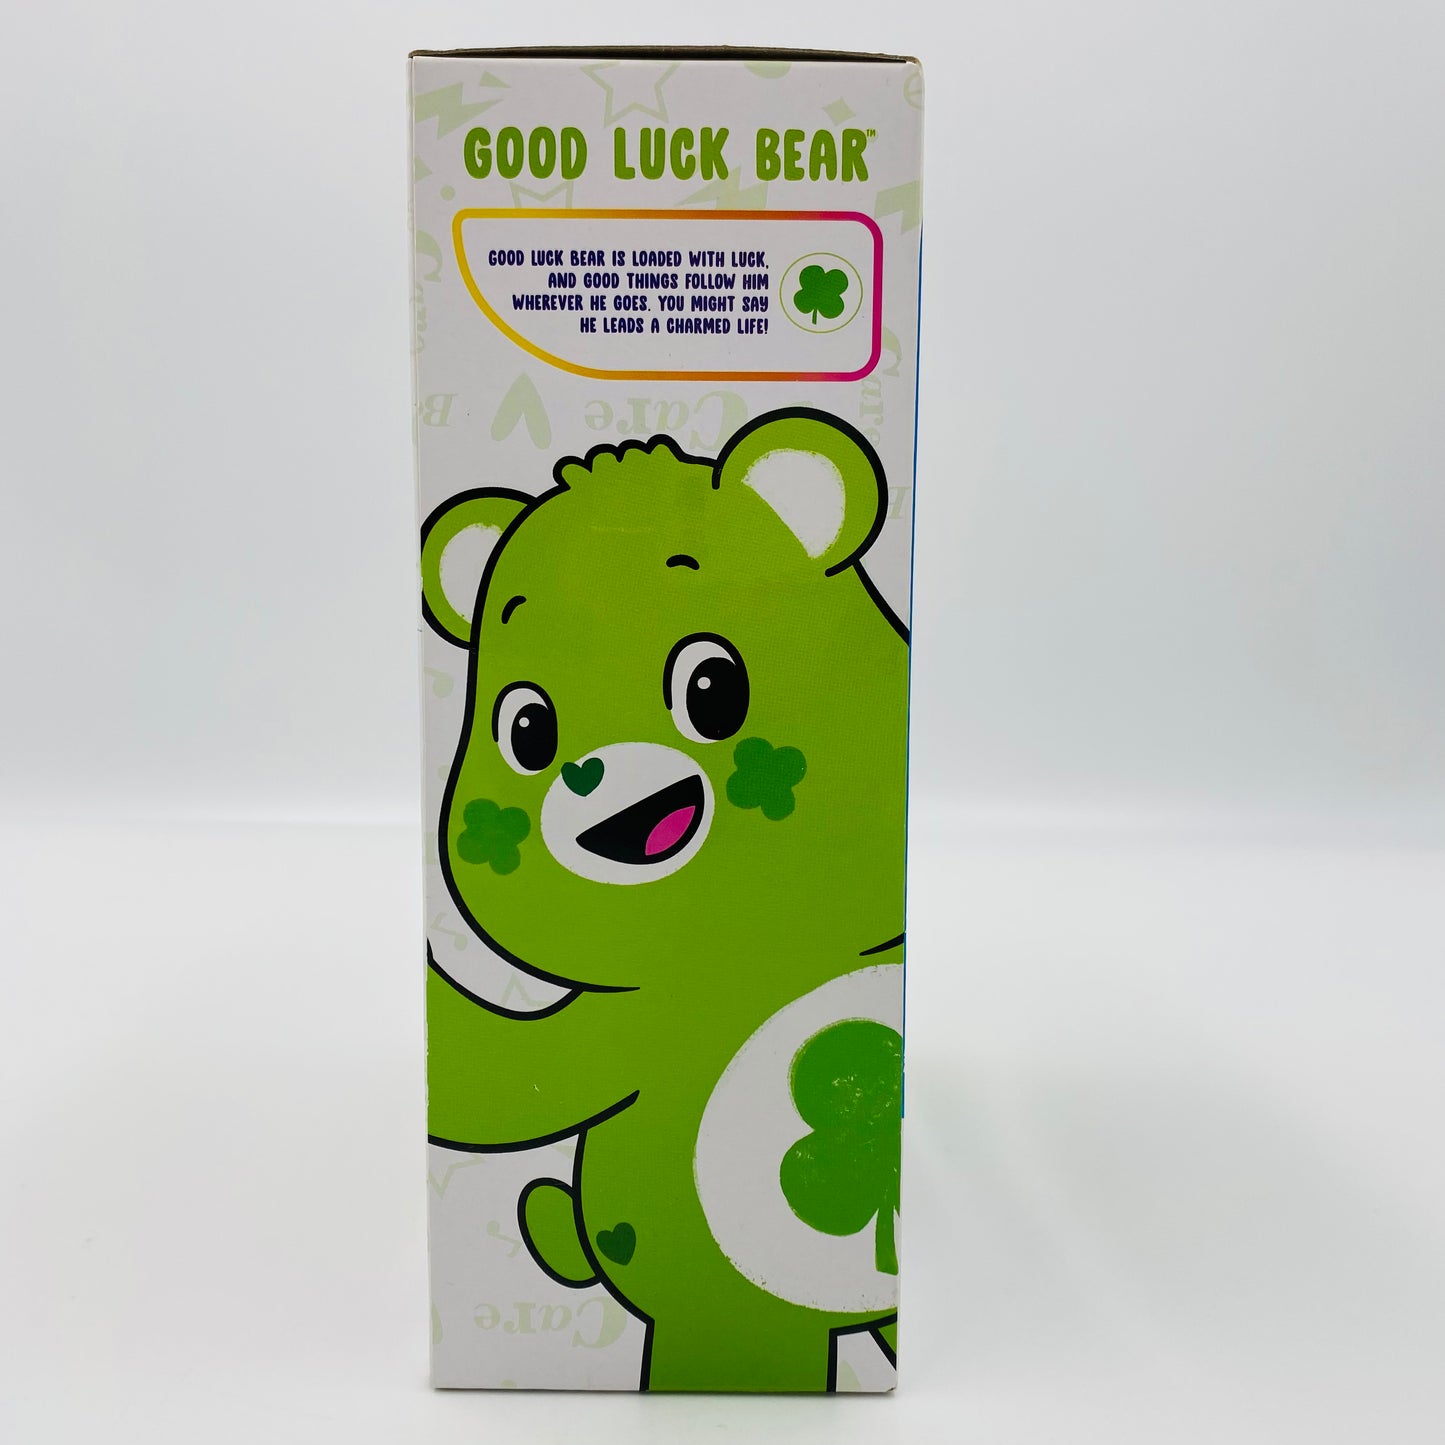 Care Bears Unlock the Magic Good Luck Bear Interactive Figure (2020) Basic Fun!